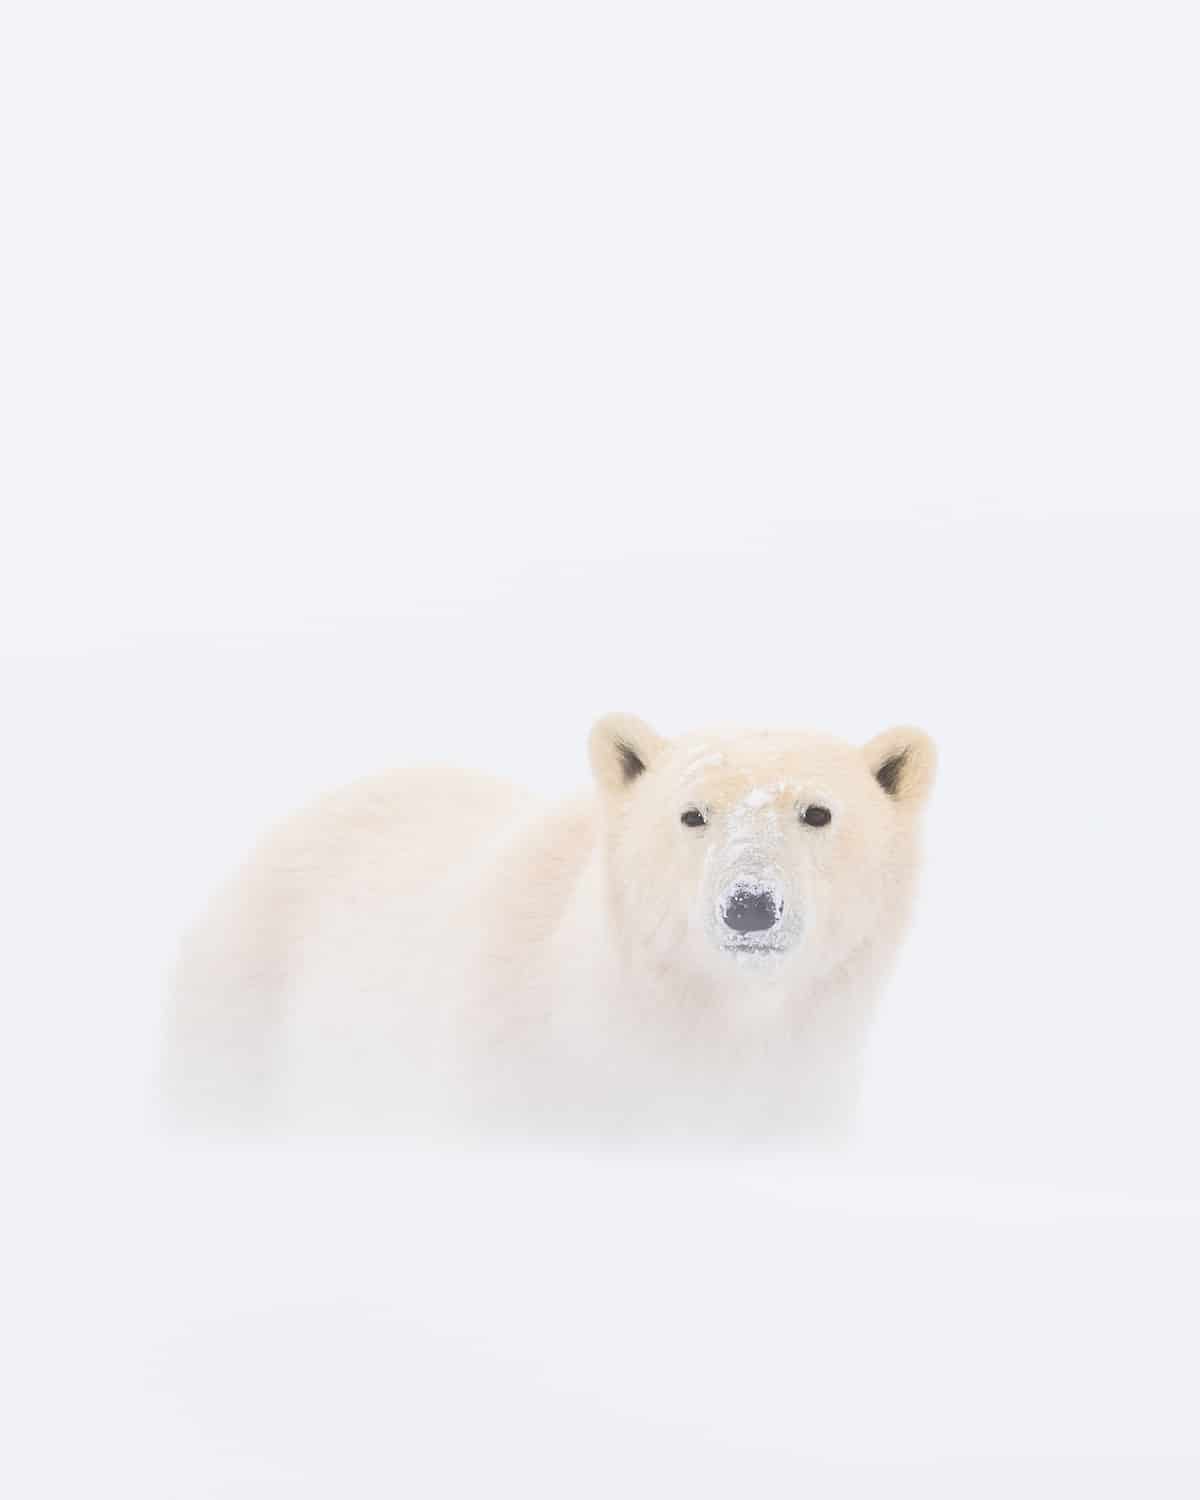 Churchill Polar Bears by George Turner